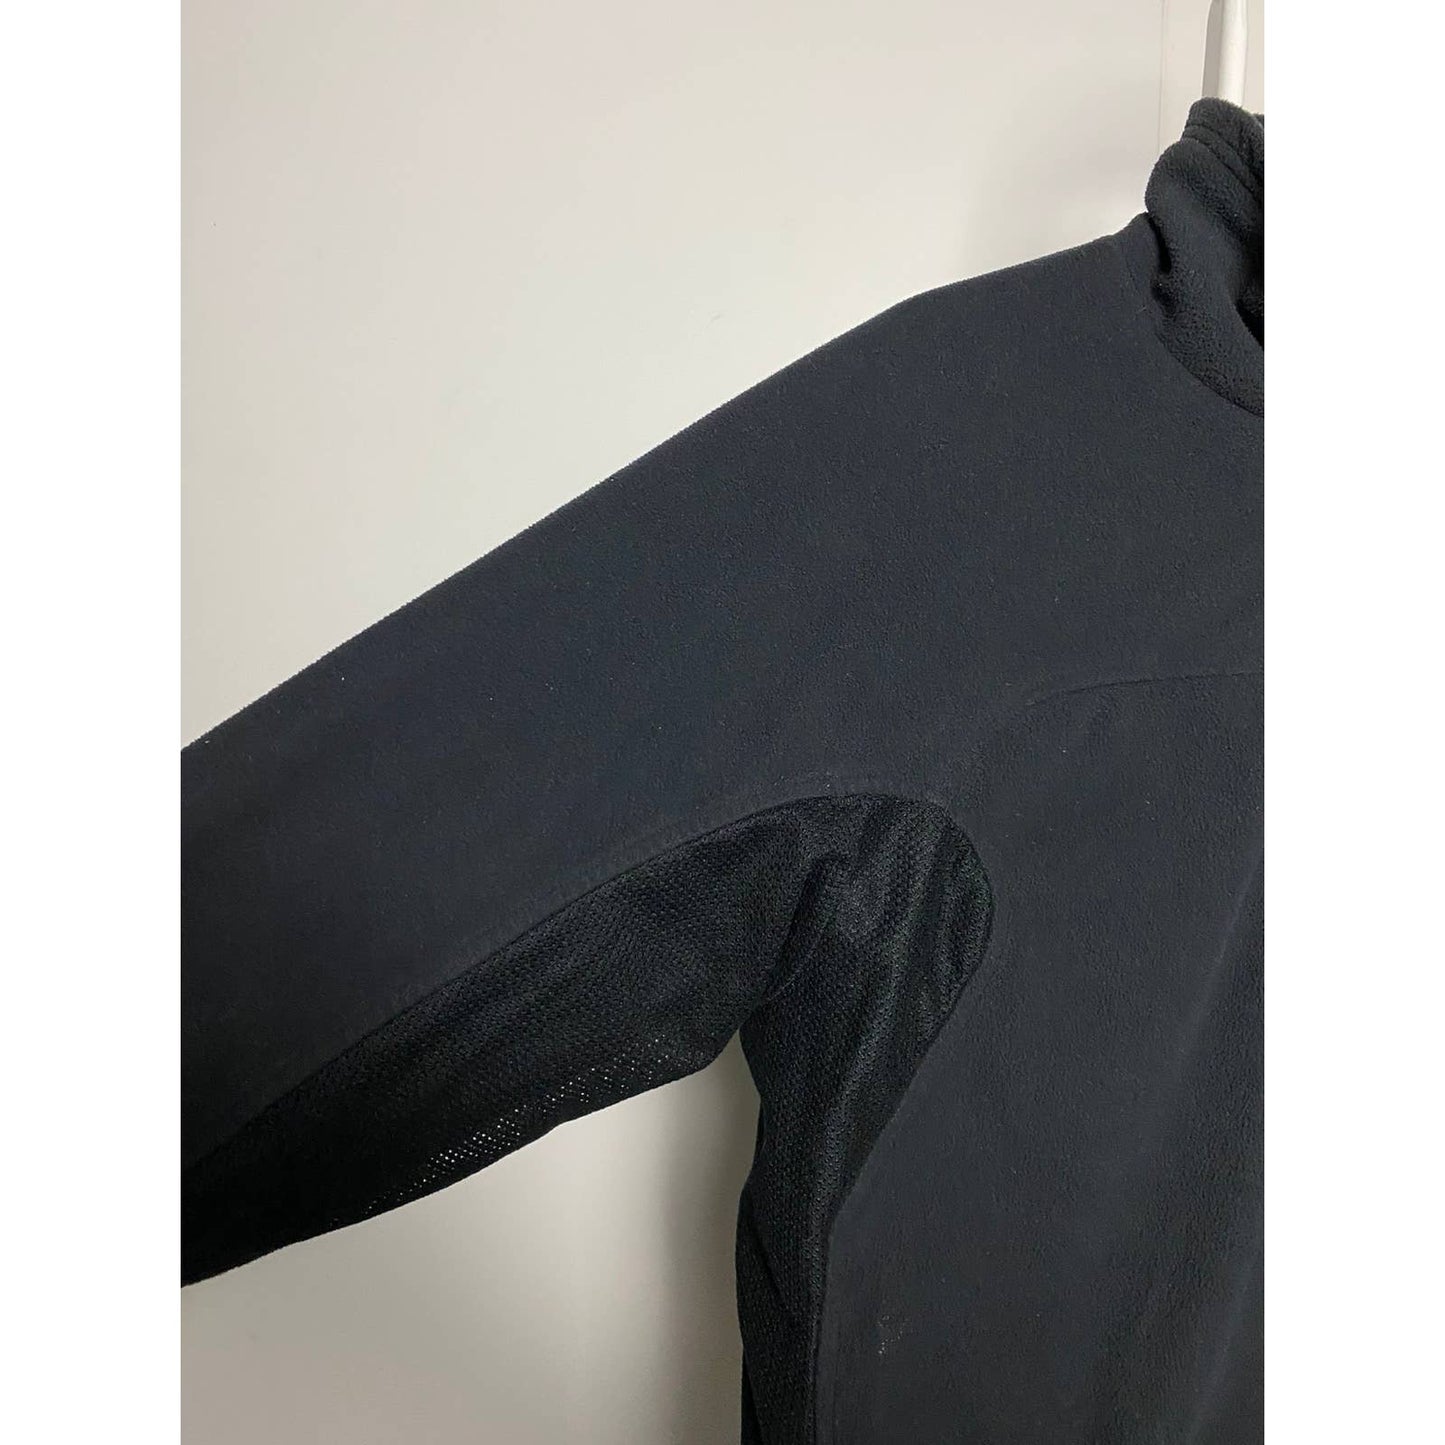 Nike ACG vintage reversible jacket fleece black 2000s